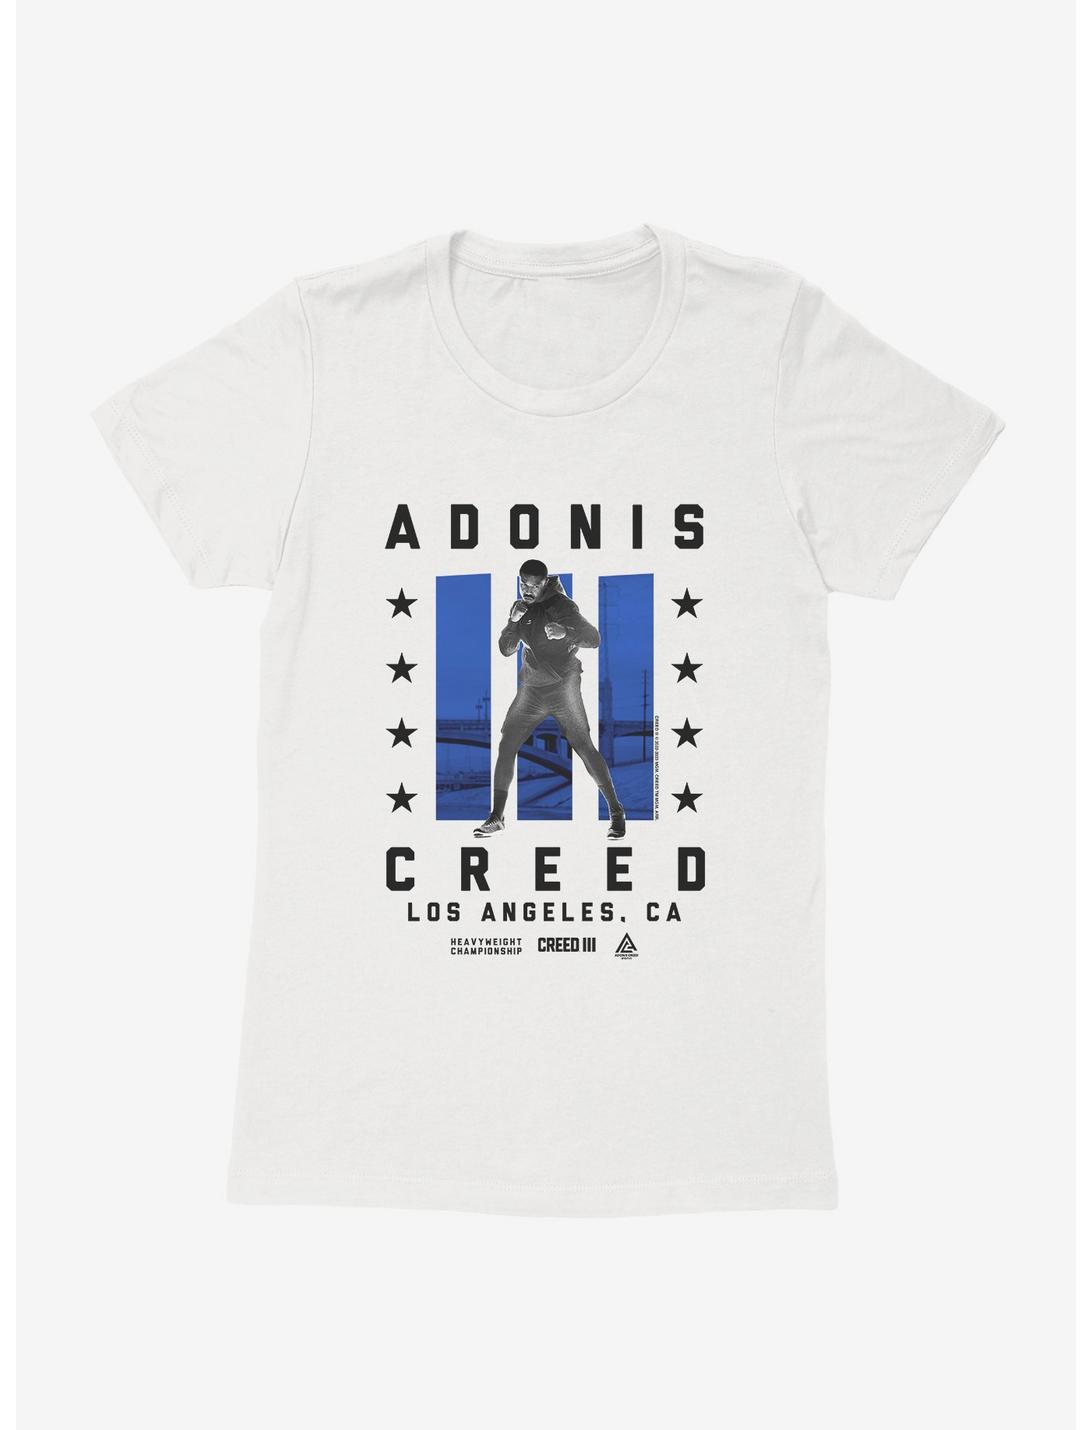 Creed III Adonis Creed LA Heavyweight Championship womens T-Shirt, WHITE, hi-res